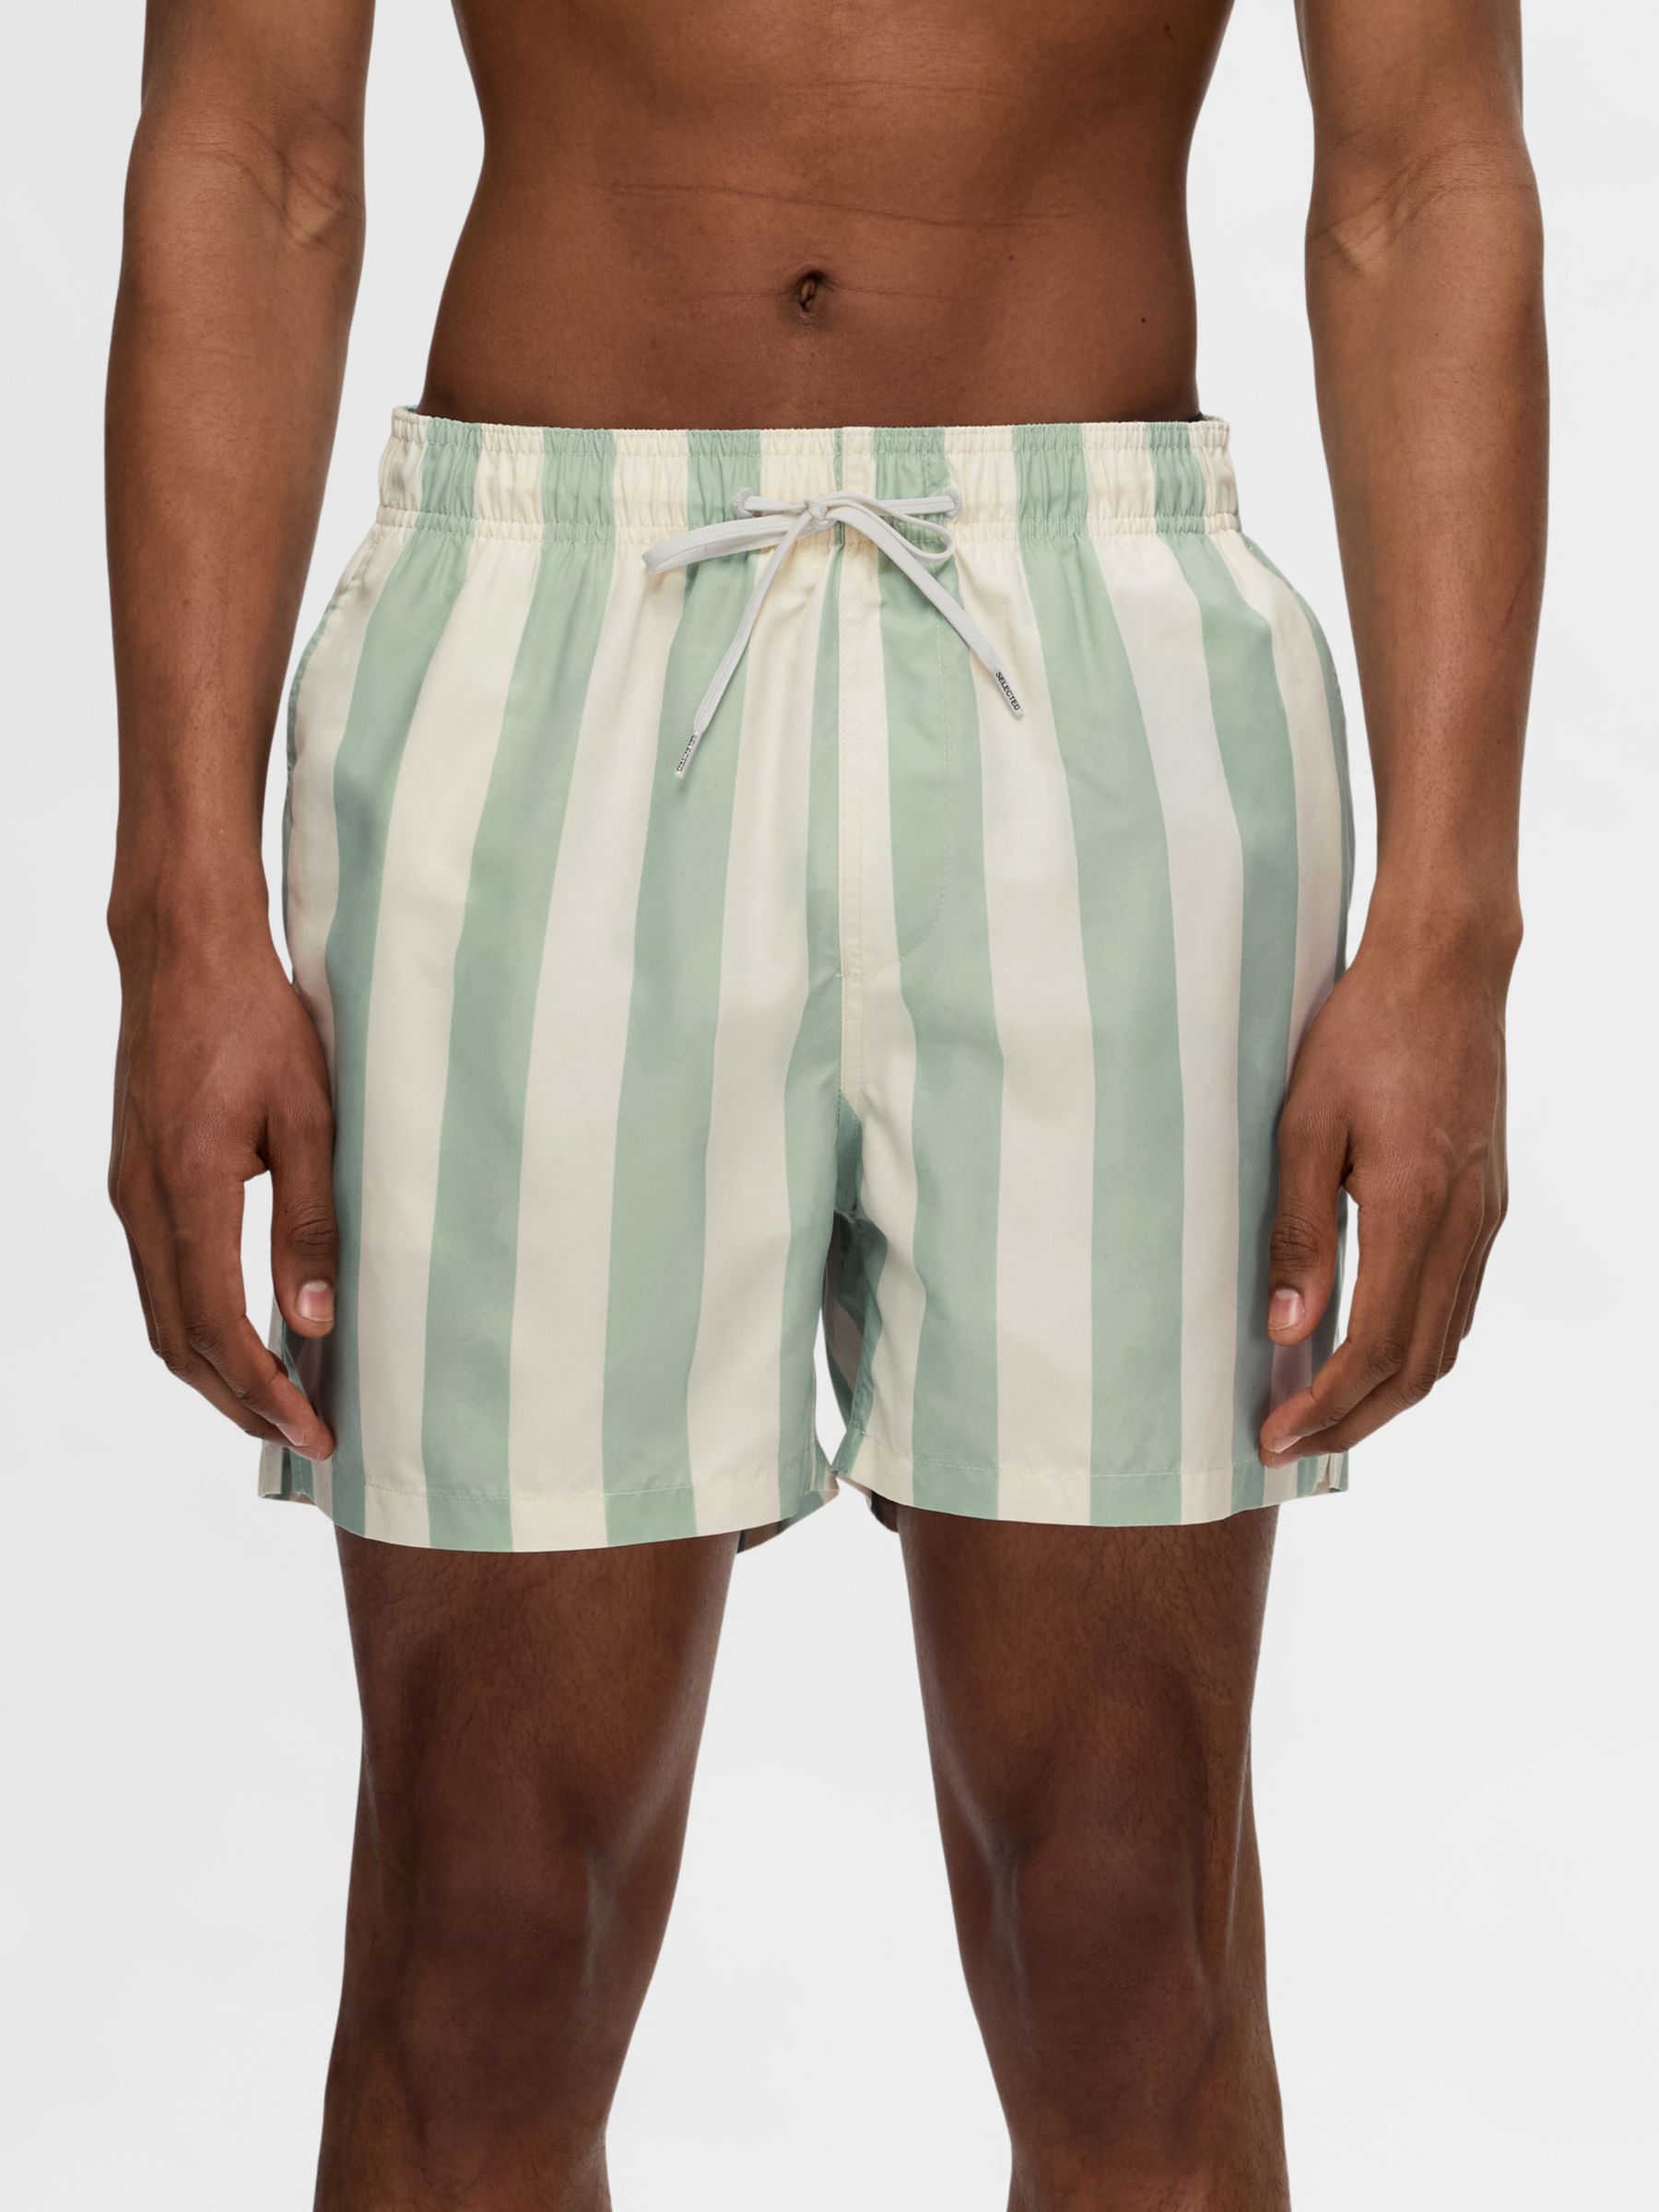 SELECTED HOMME Stripe Swim Shorts, Bok Choy/Egret, S